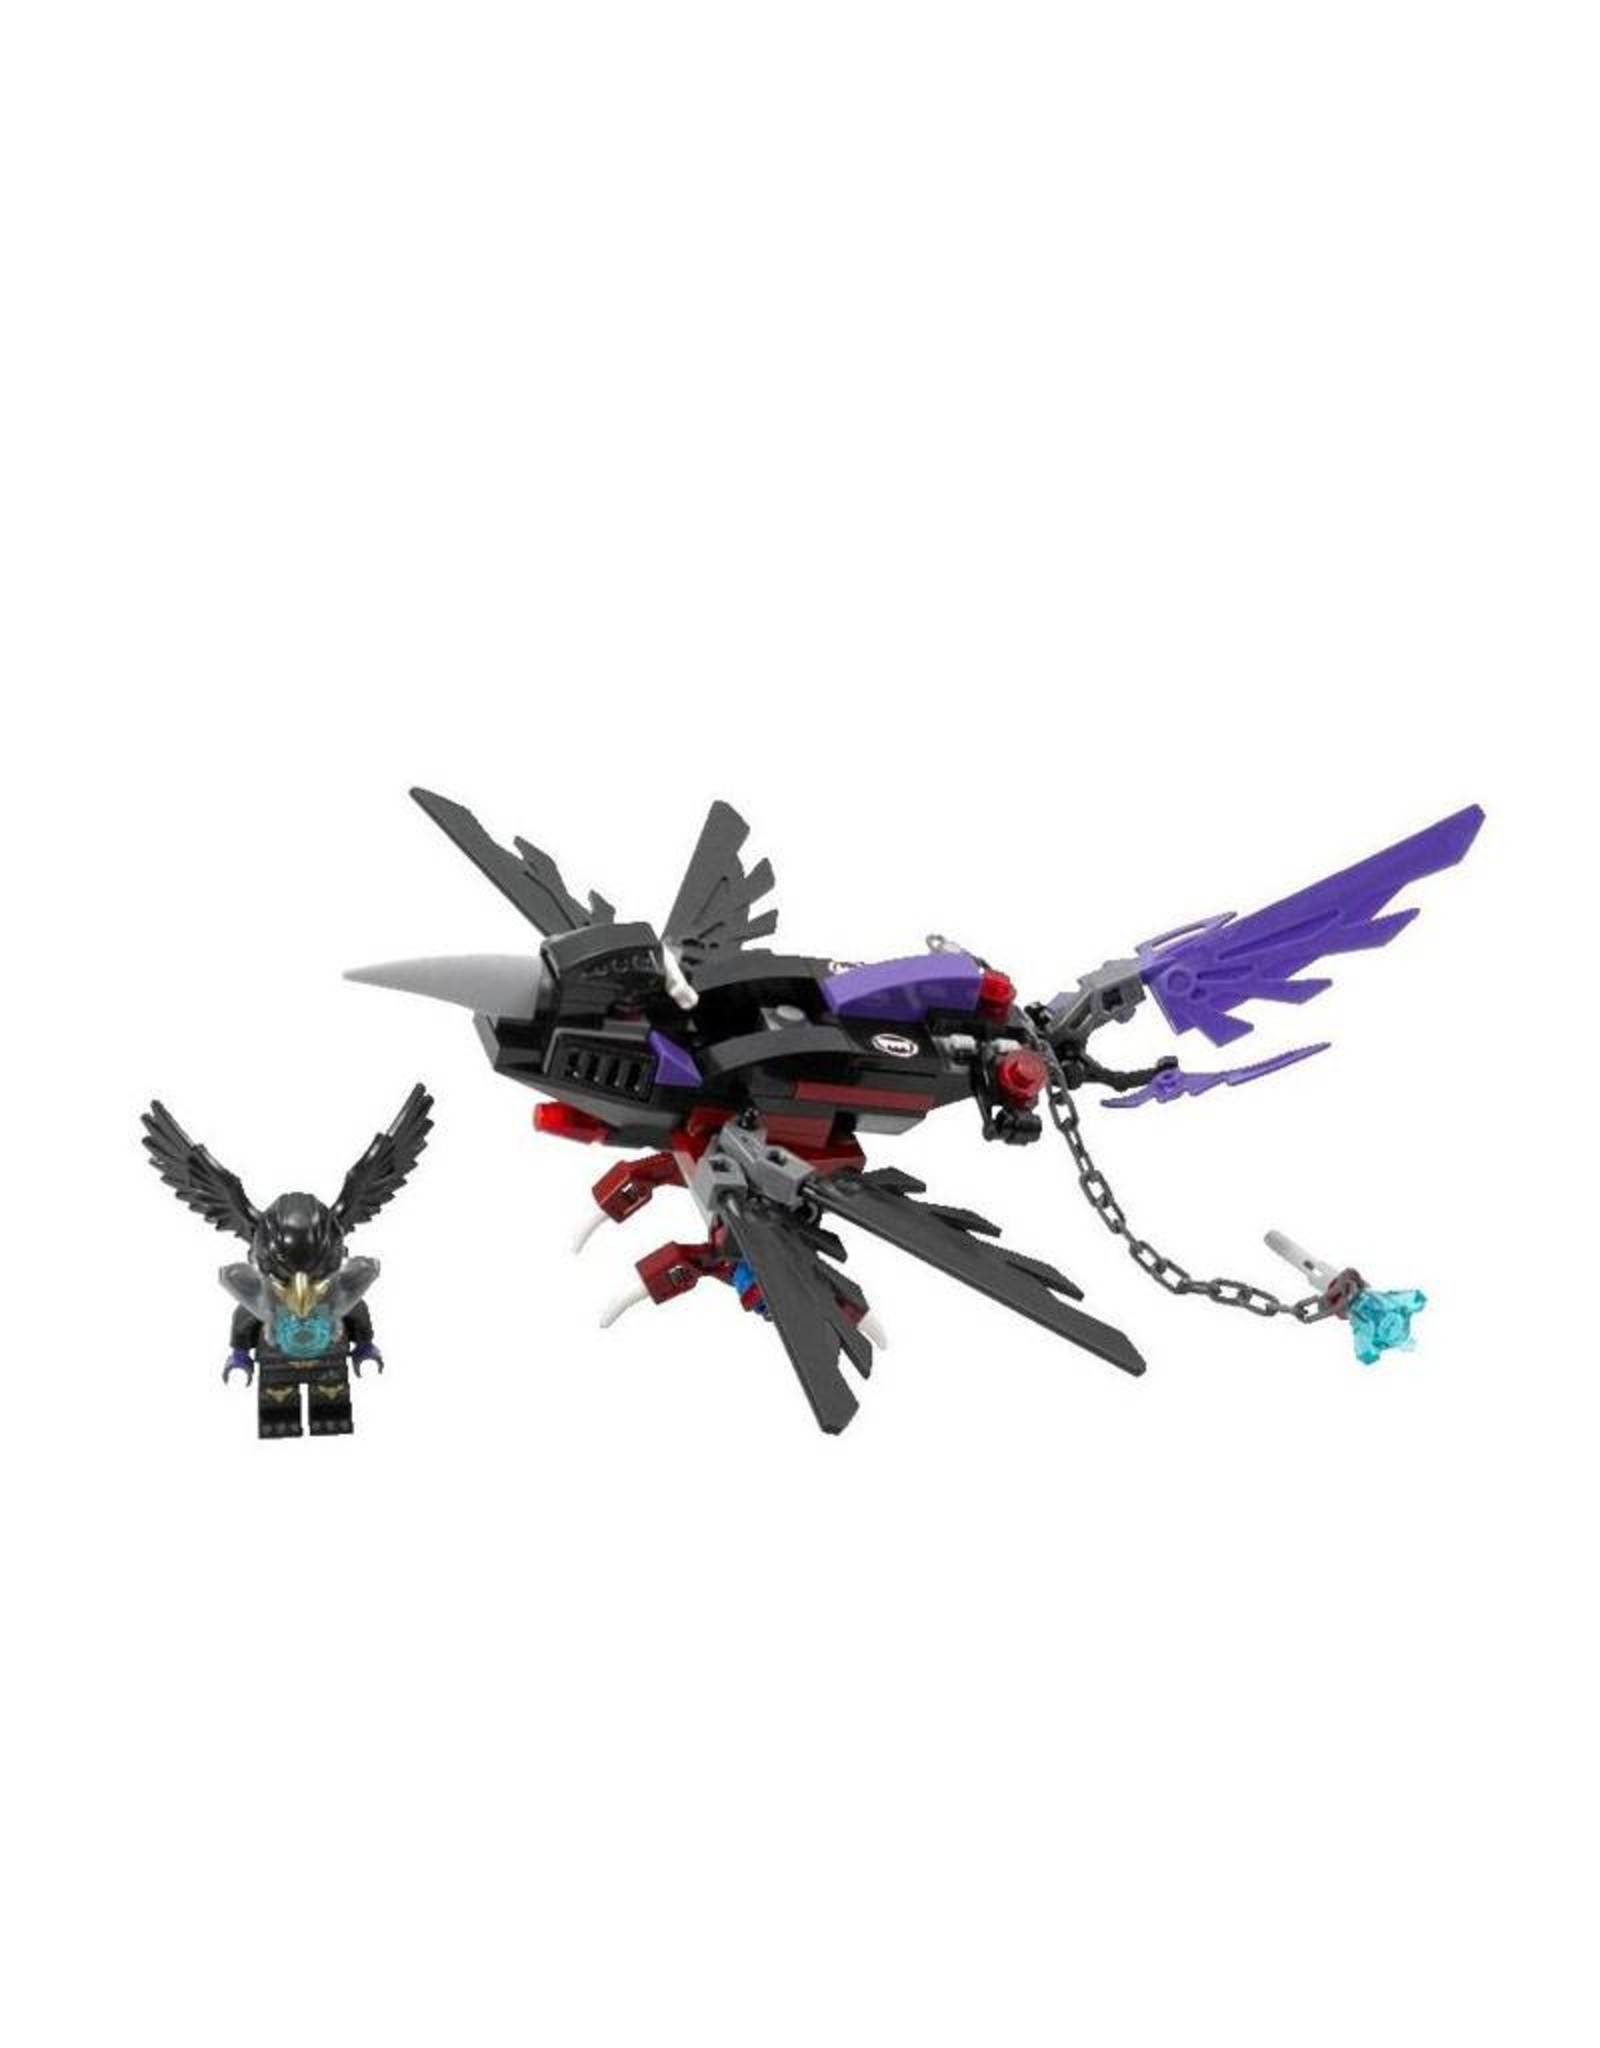 LEGO LEGO 70000 Razcal's Glider CHIMA